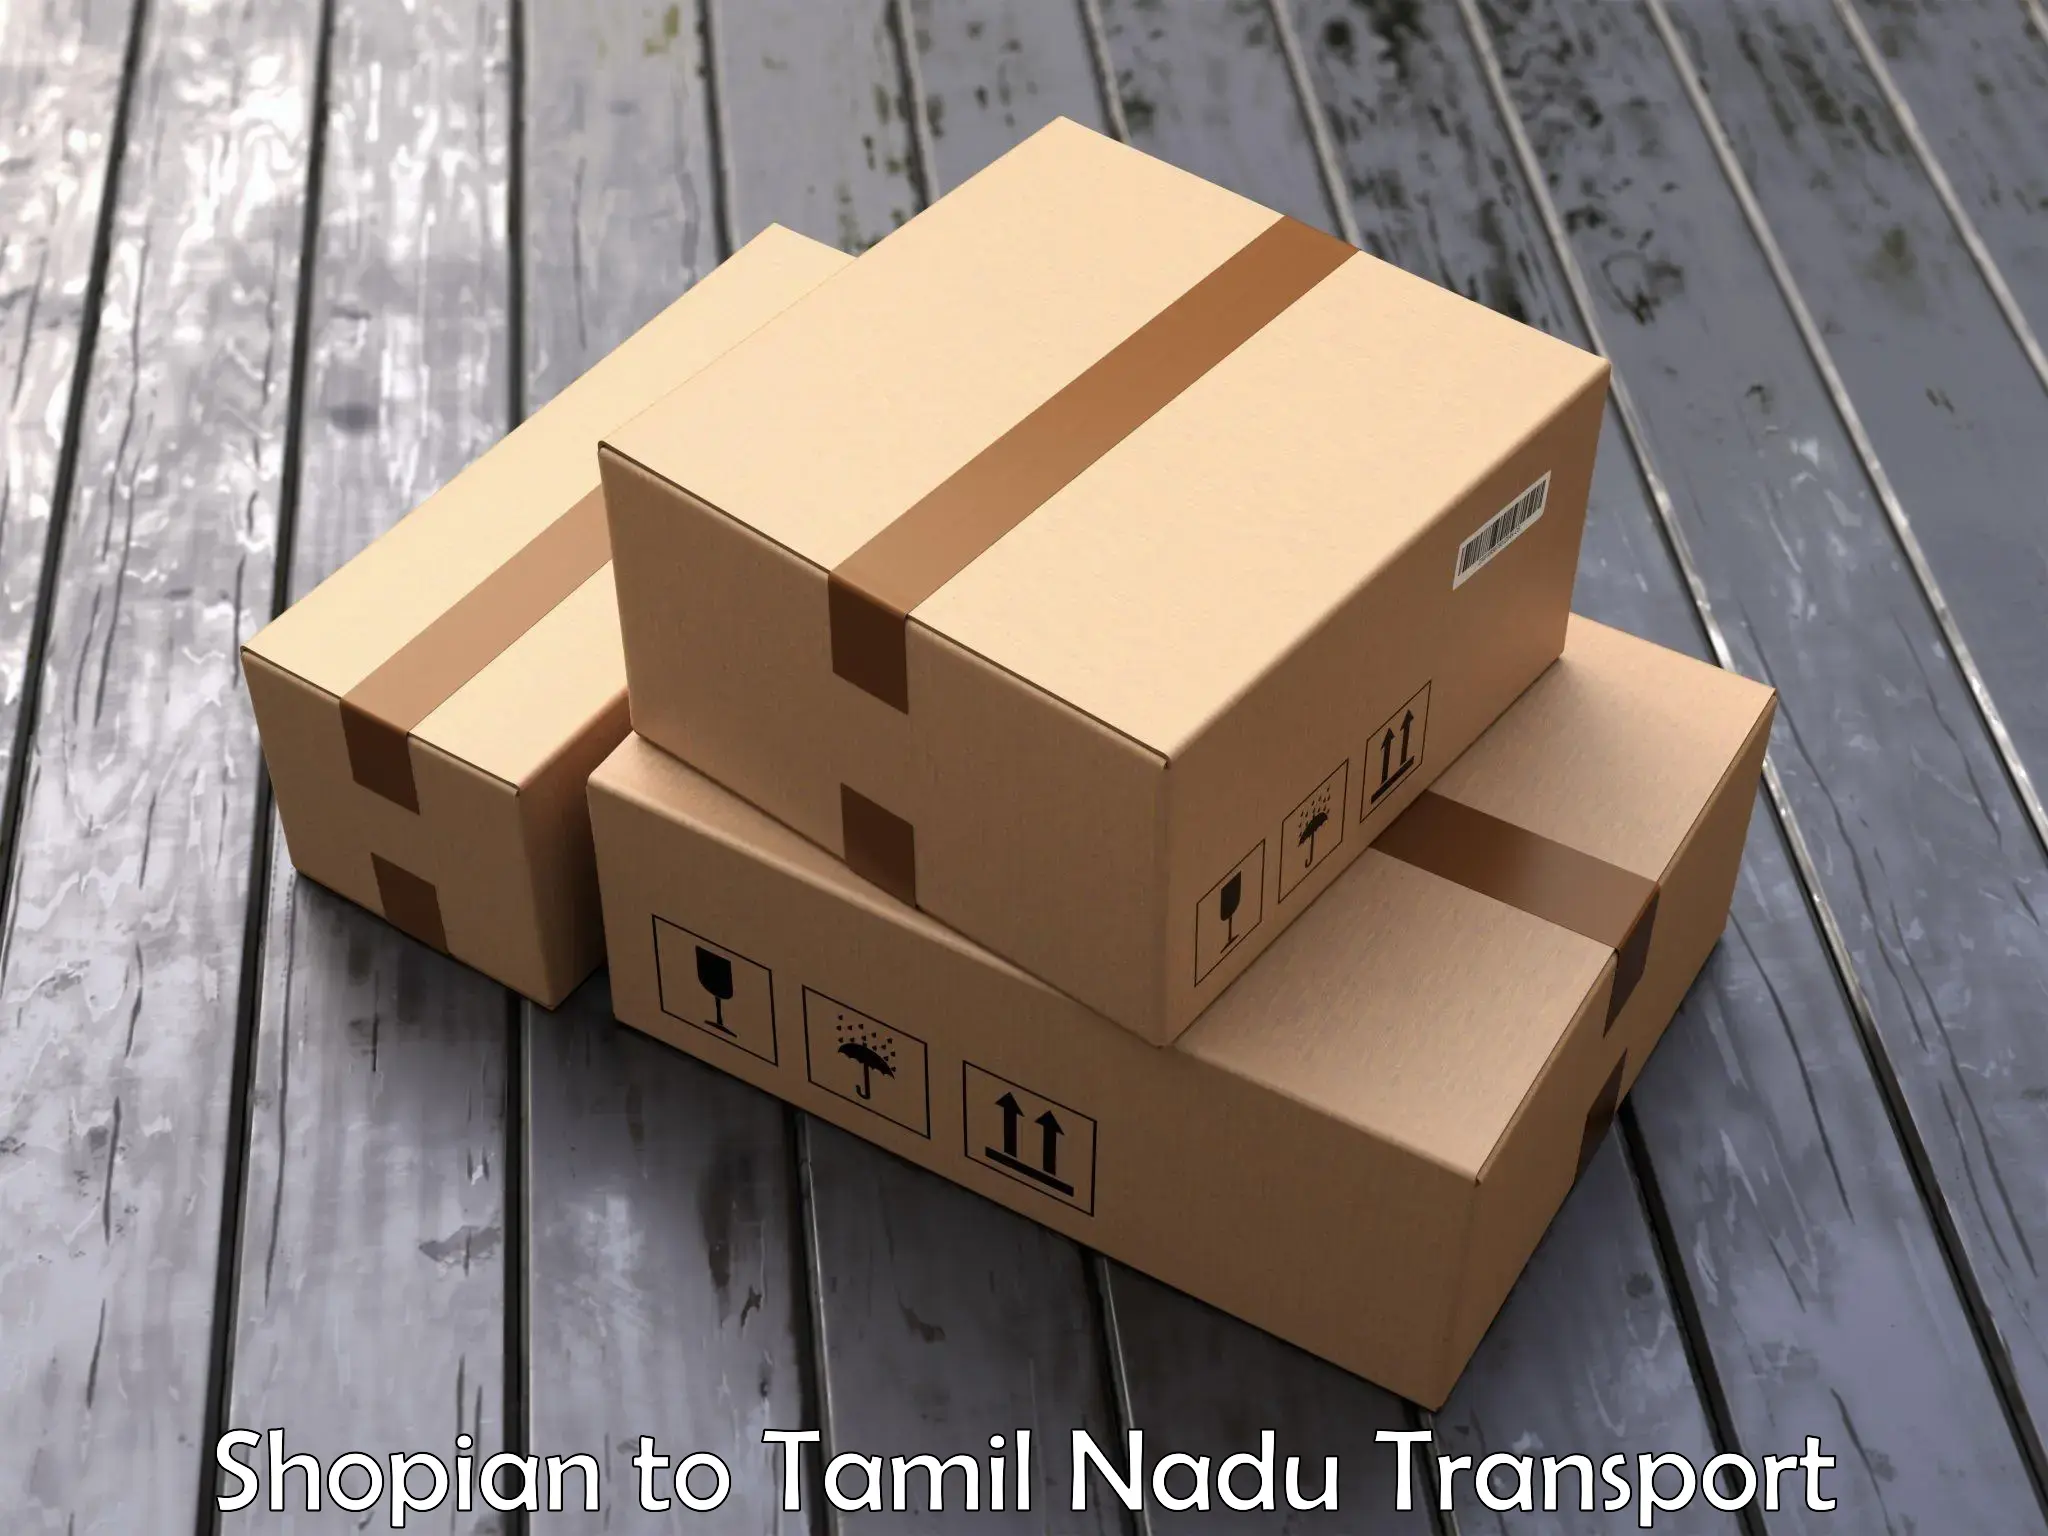 Daily transport service Shopian to Chennai Port